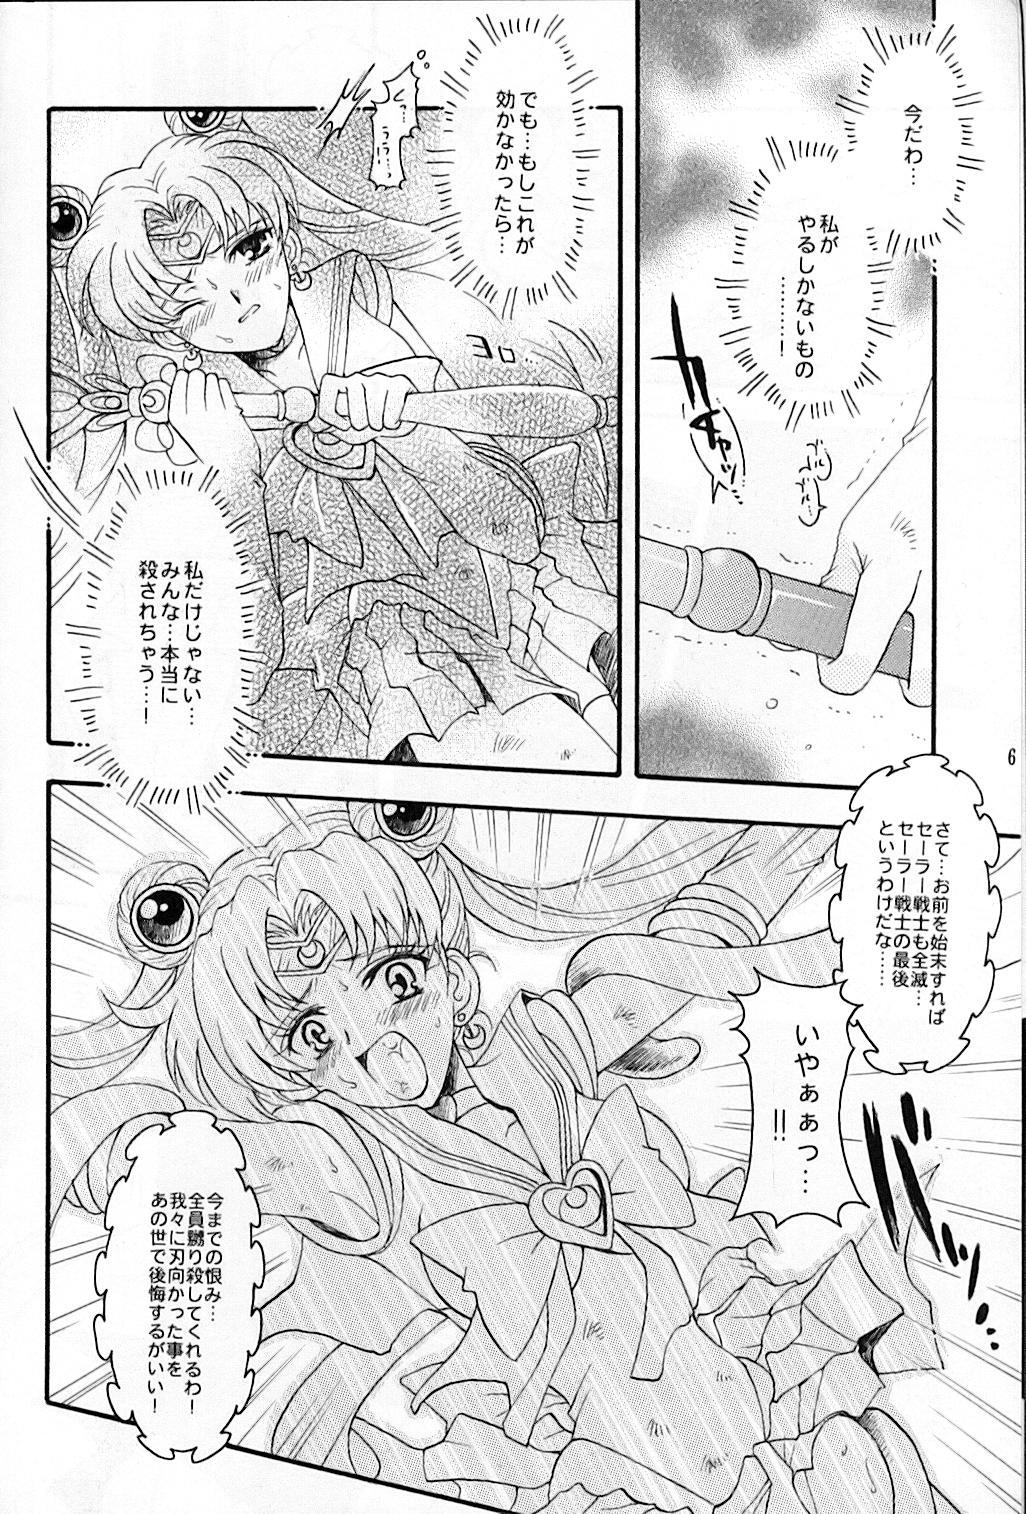 Girlfriend chanson de I'adieu - Sailor moon Facebook - Page 7